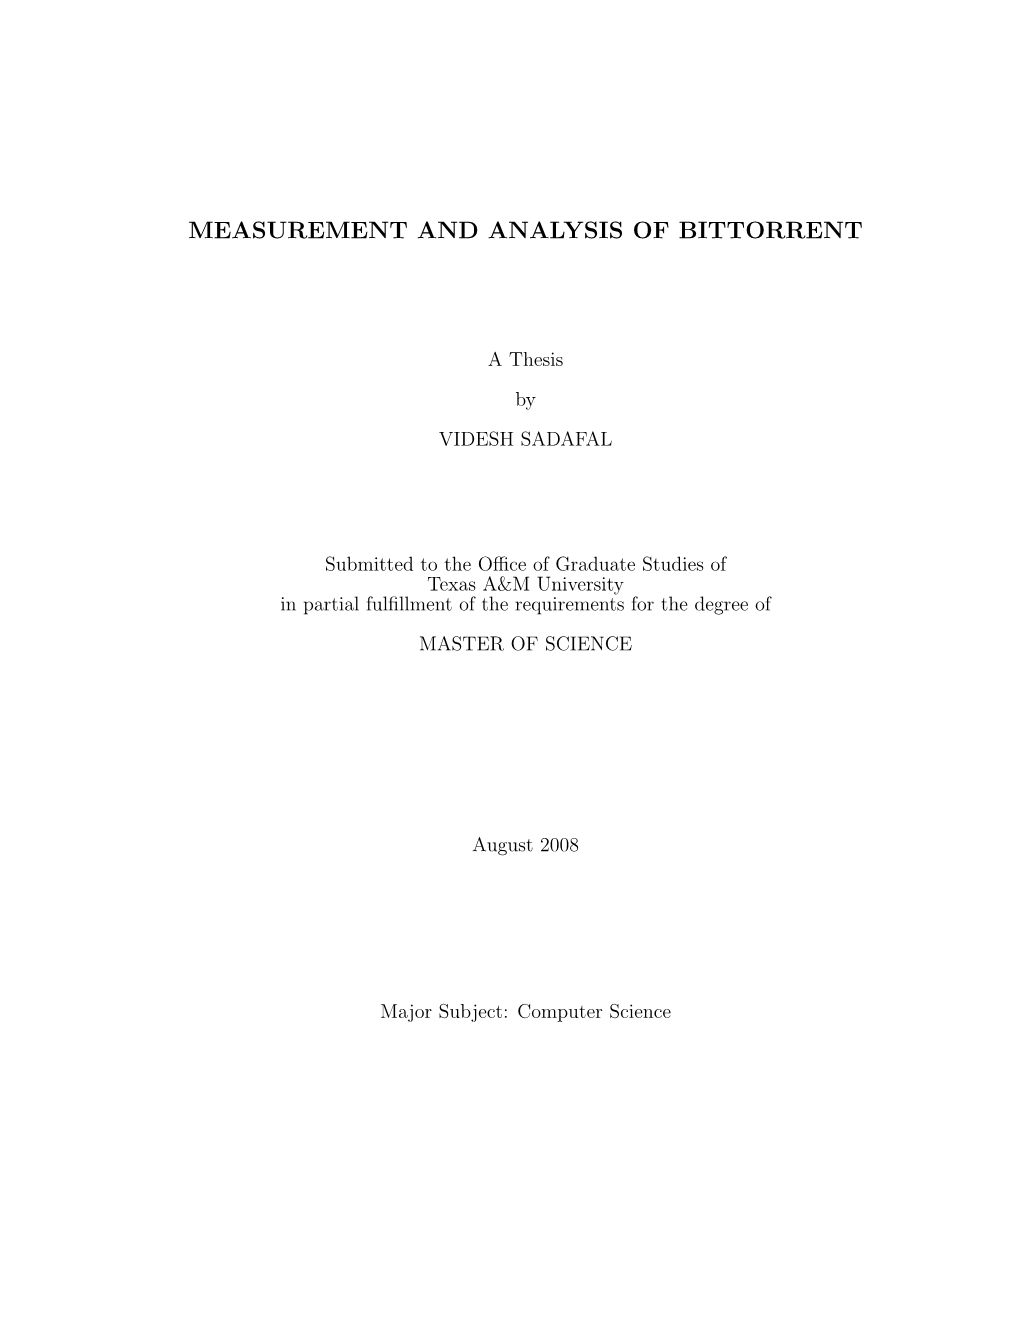 Measurement and Analysis of Bittorrent